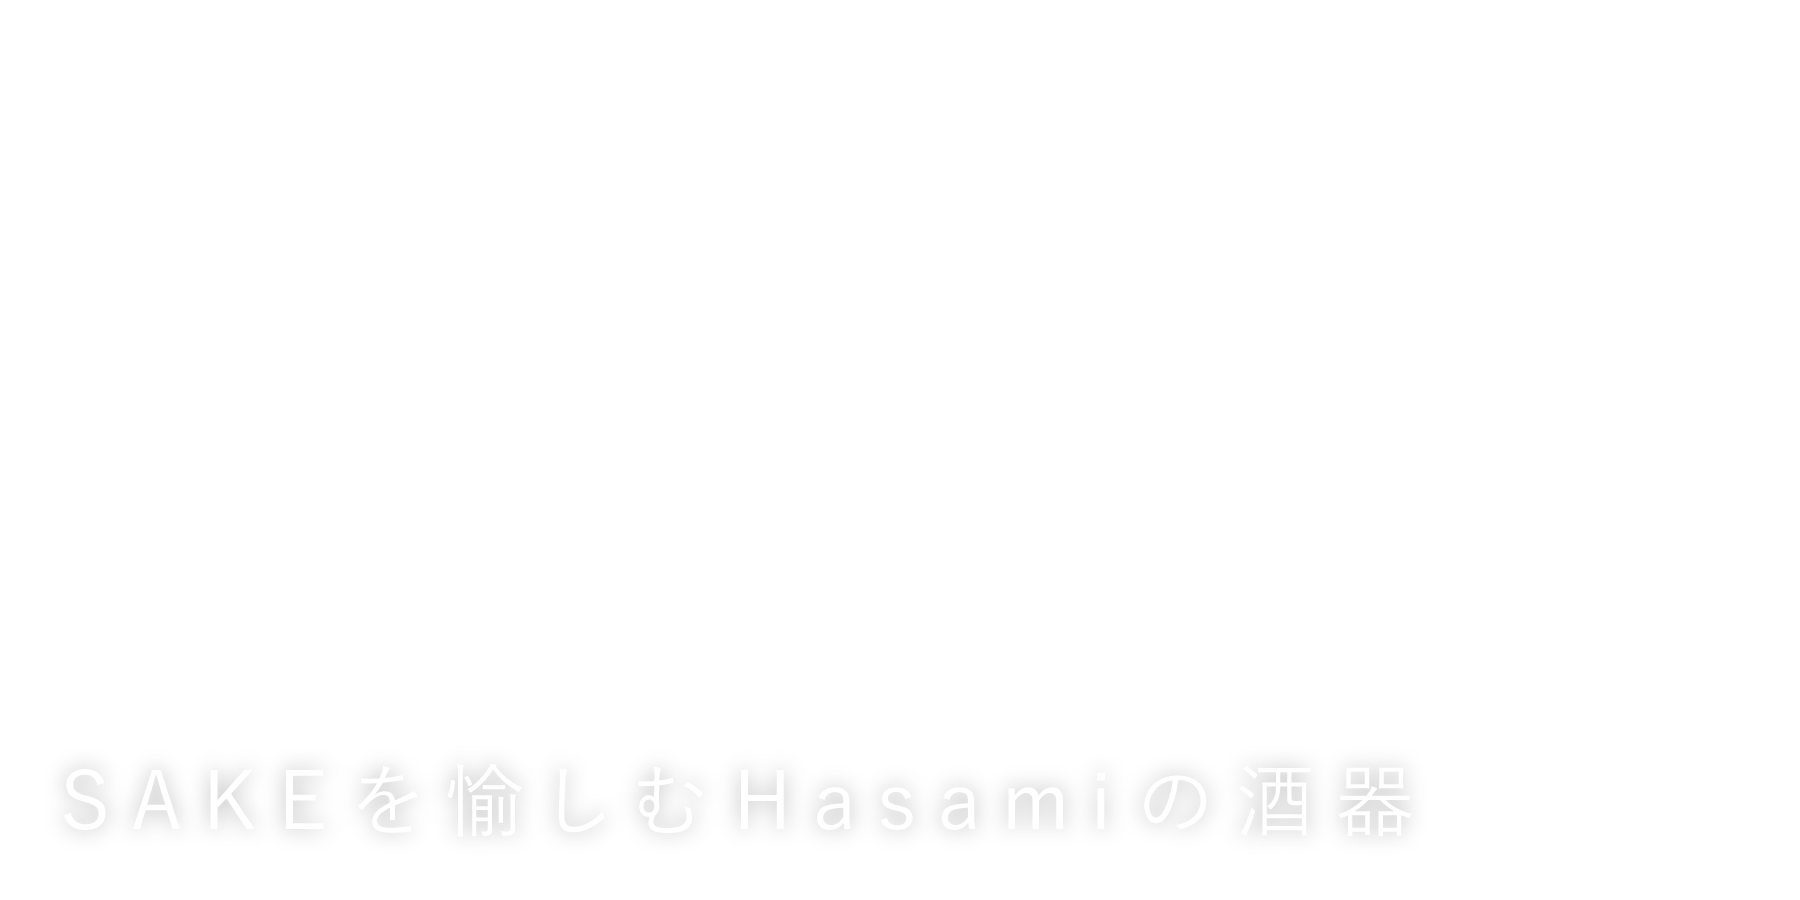 Hasami Life 焼き物は暮らしの中でこそ華やぐ